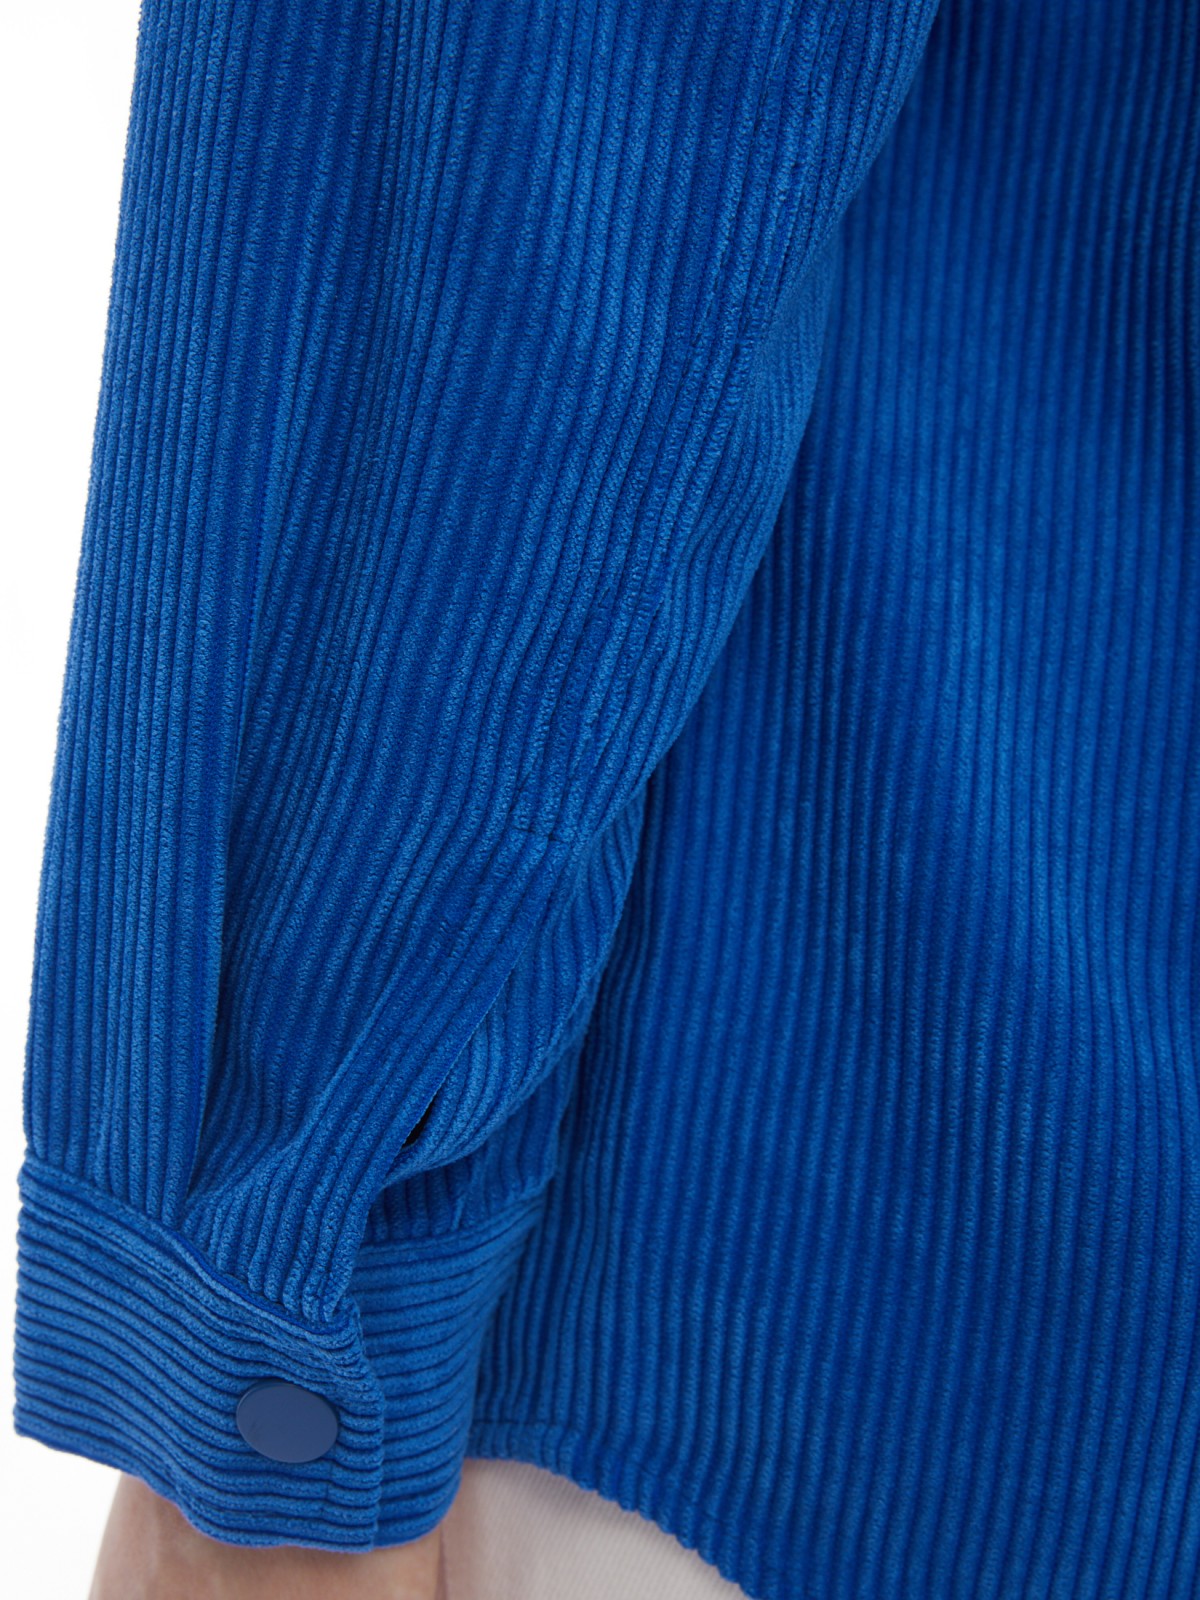 Куртка-рубашка объёмного силуэта из вельвета zolla 02412540L023, цвет голубой, размер XS - фото 6